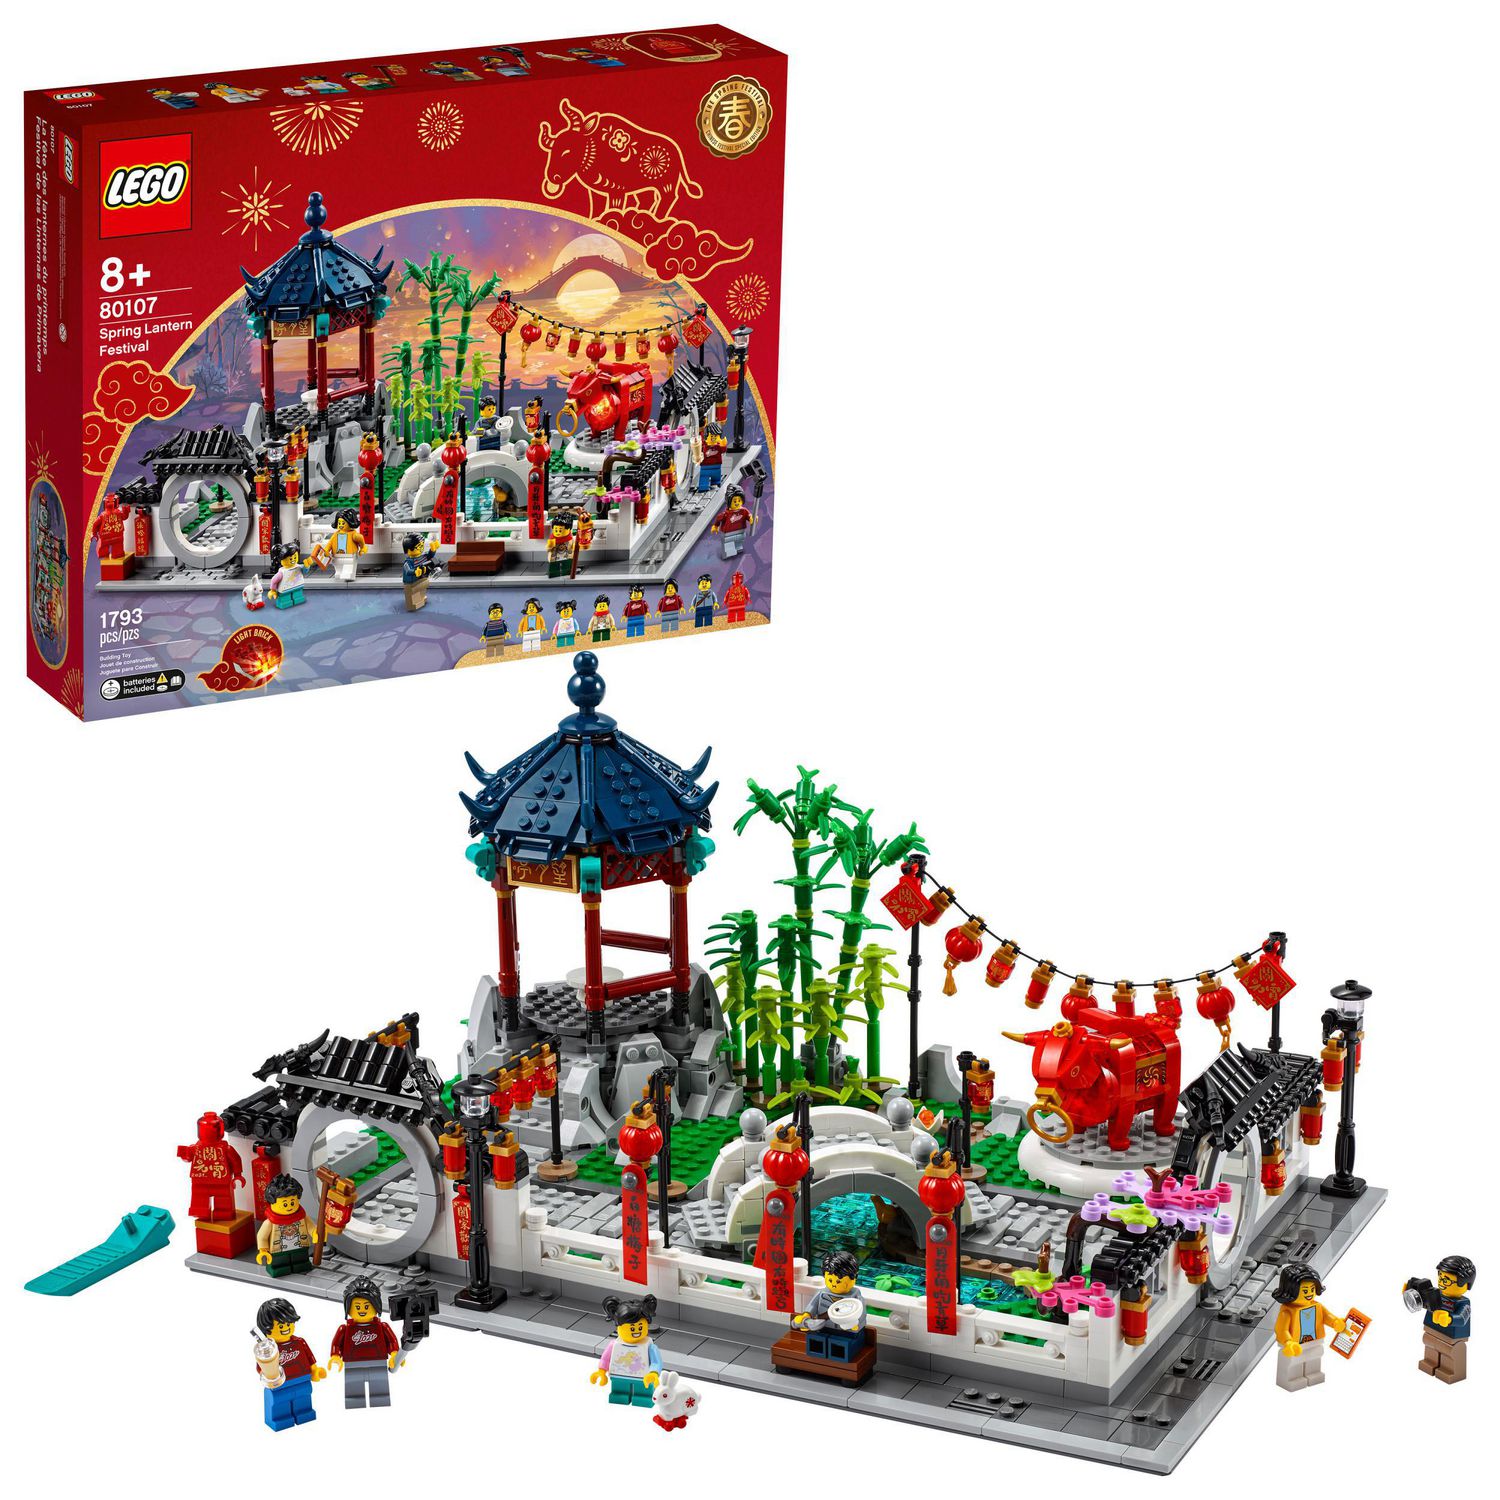 LEGO Spring Lantern Festival 80107 Building Kit; Collectible Gift